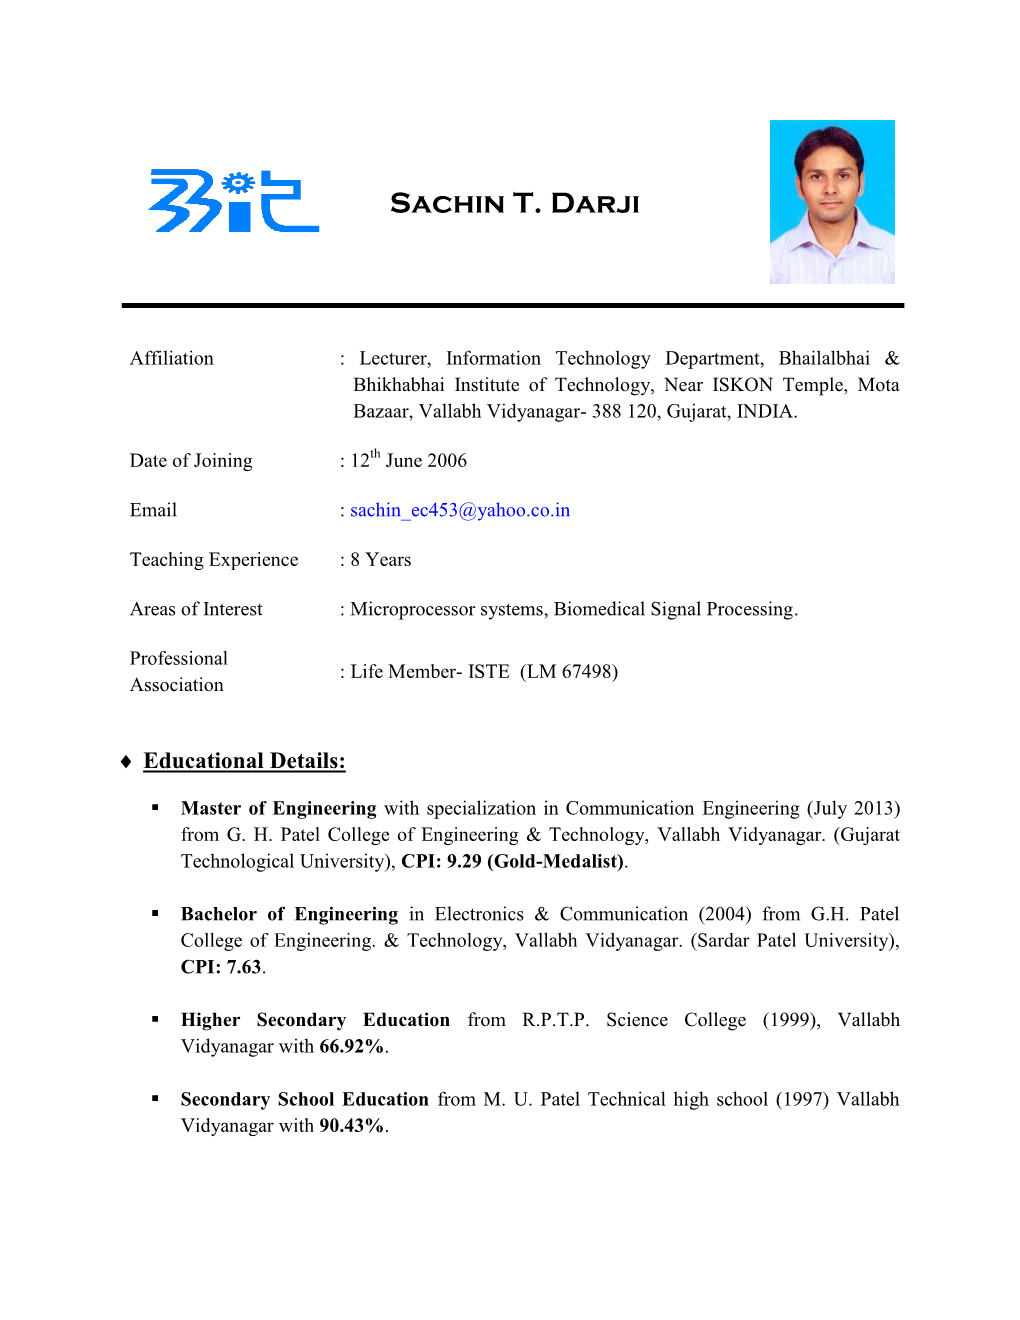 Sachin T. Darji